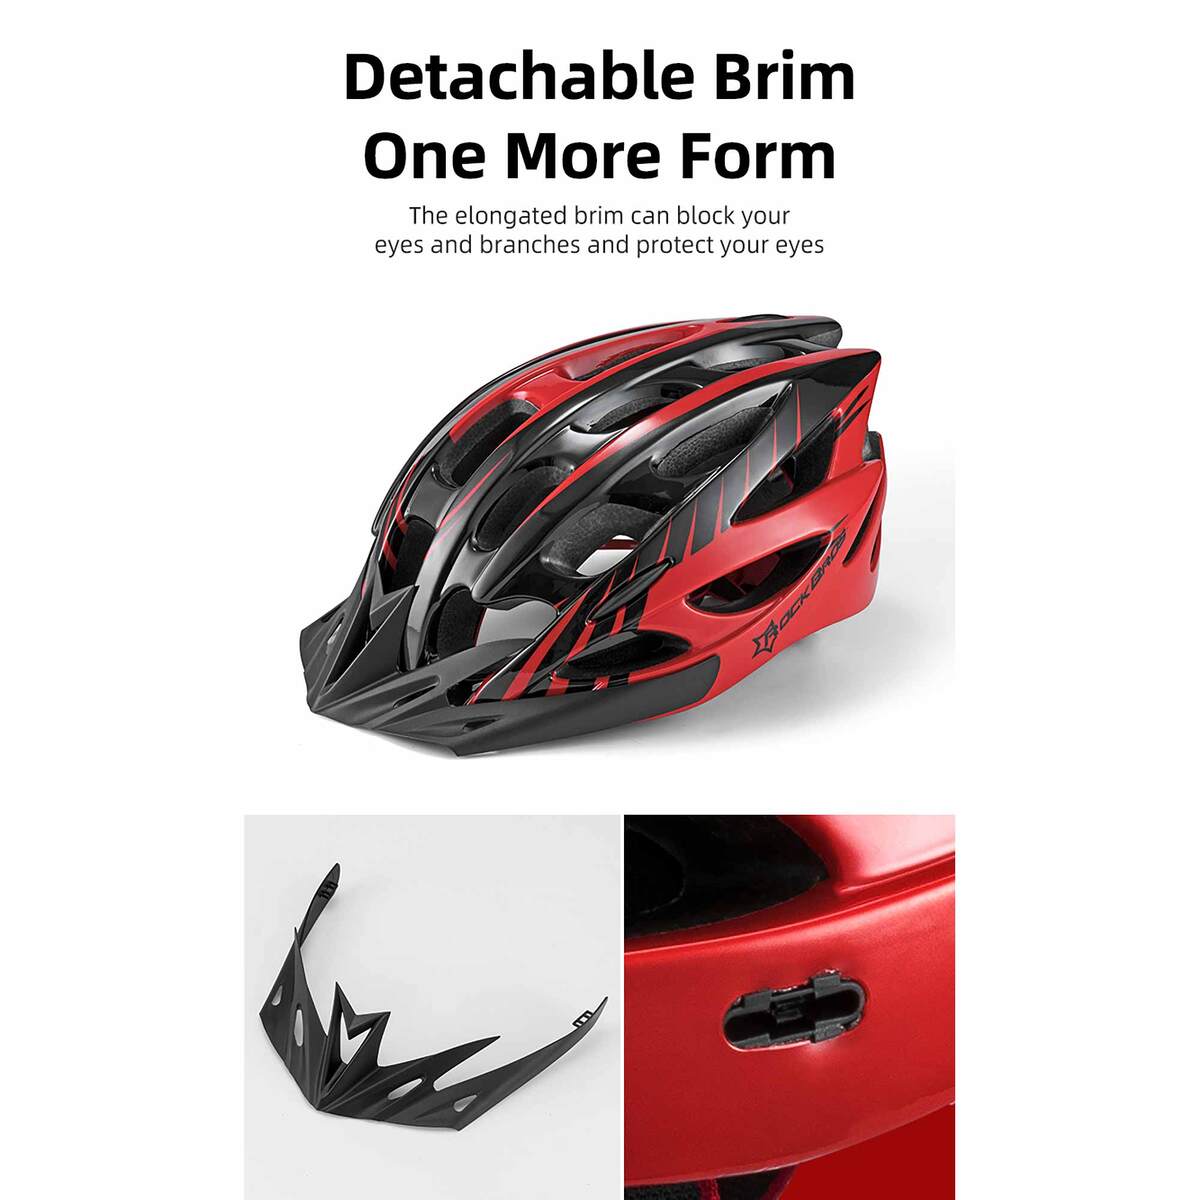 ROCKBROS Cycling Helmet WT027BGY Black Gray